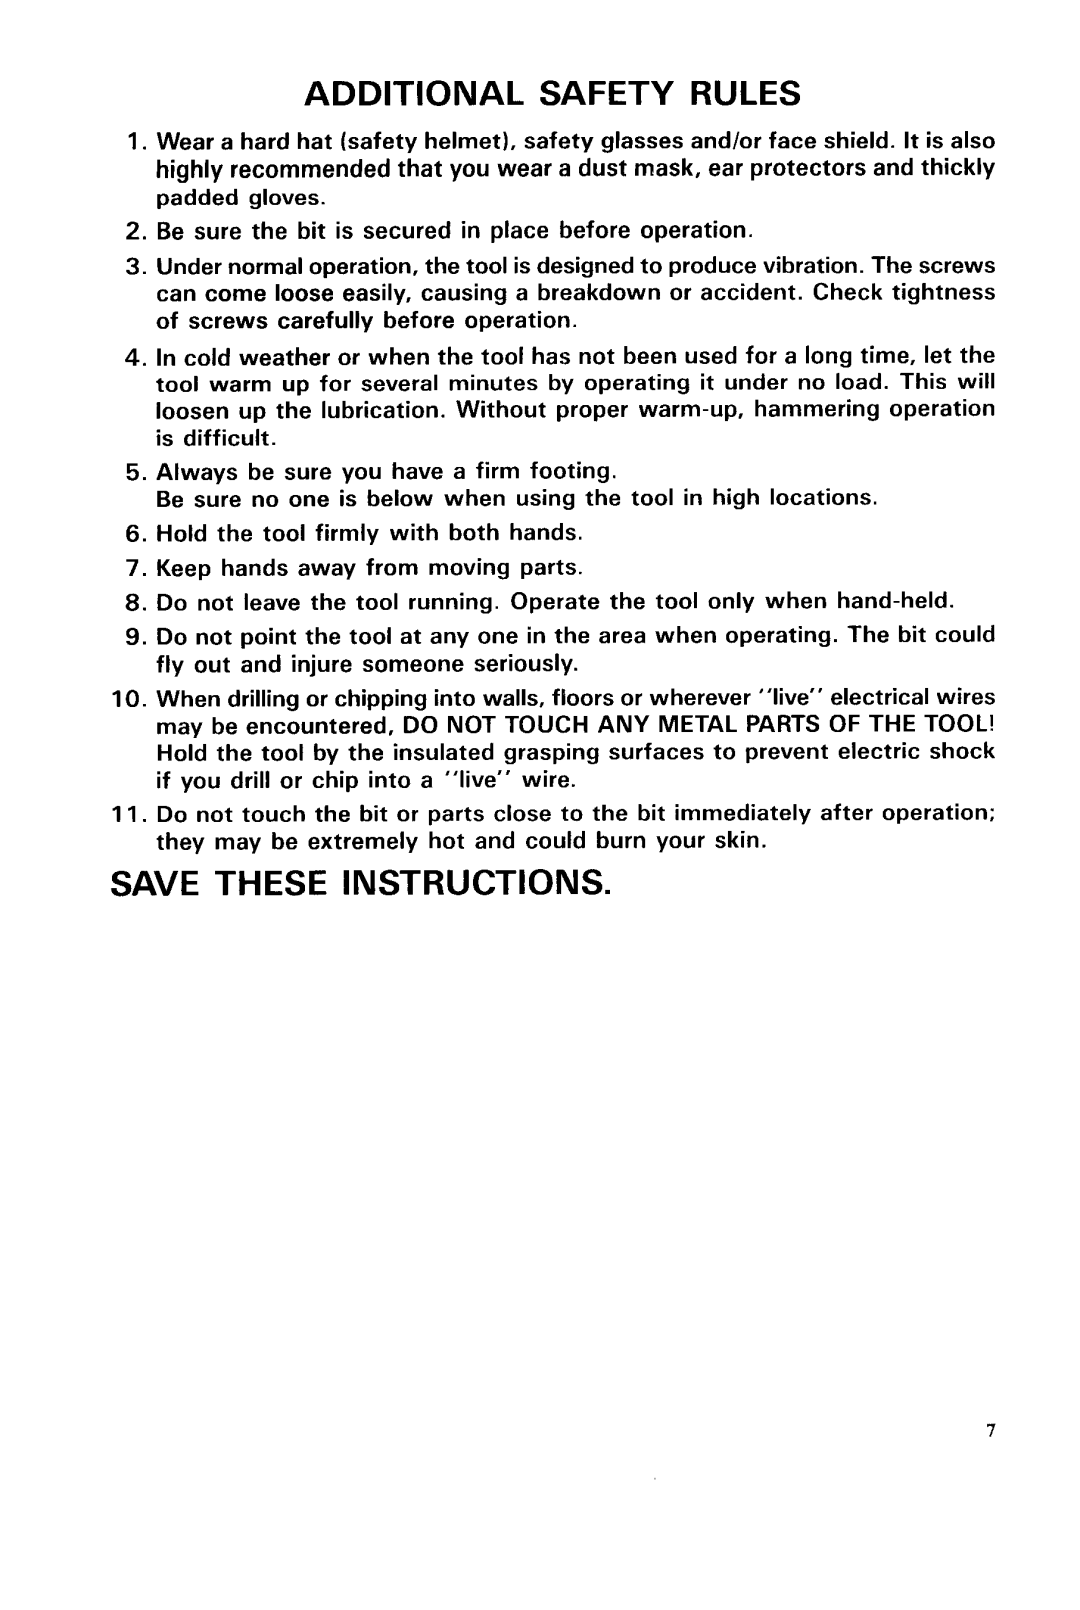 Makita HRIGODH instruction manual Additional Safety Rules, Save These Instructions 